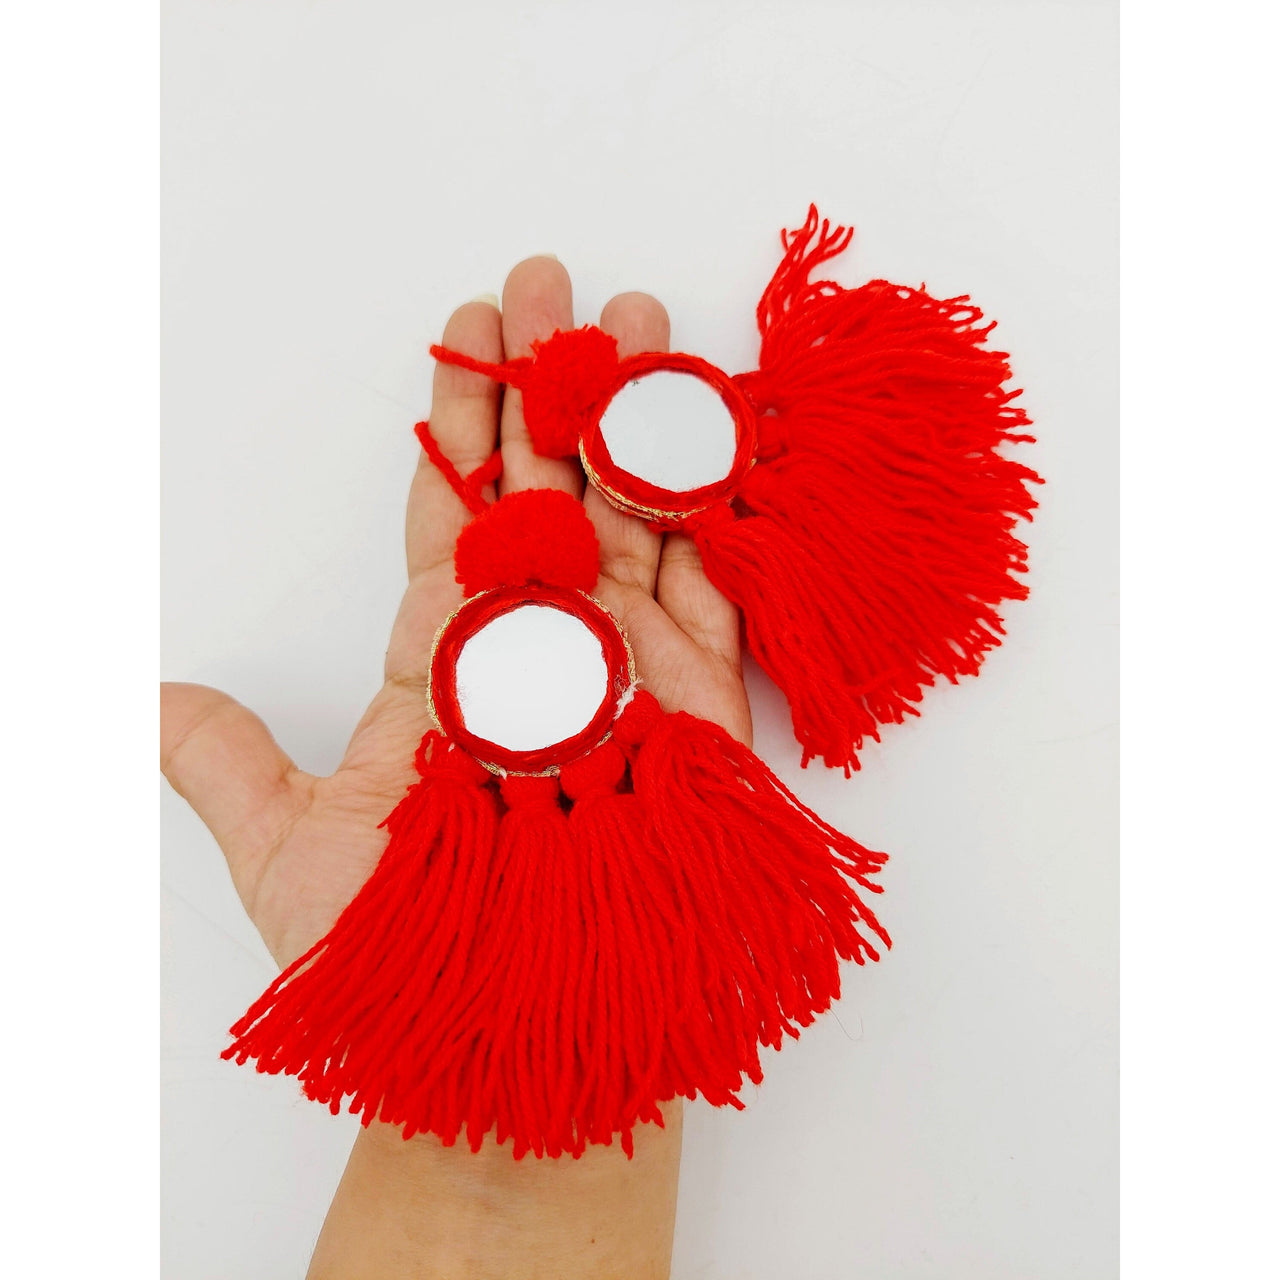 Mirrored Red Wool Tassels, Red Pompom Mirror Tassel, Handmade Latkan Boho